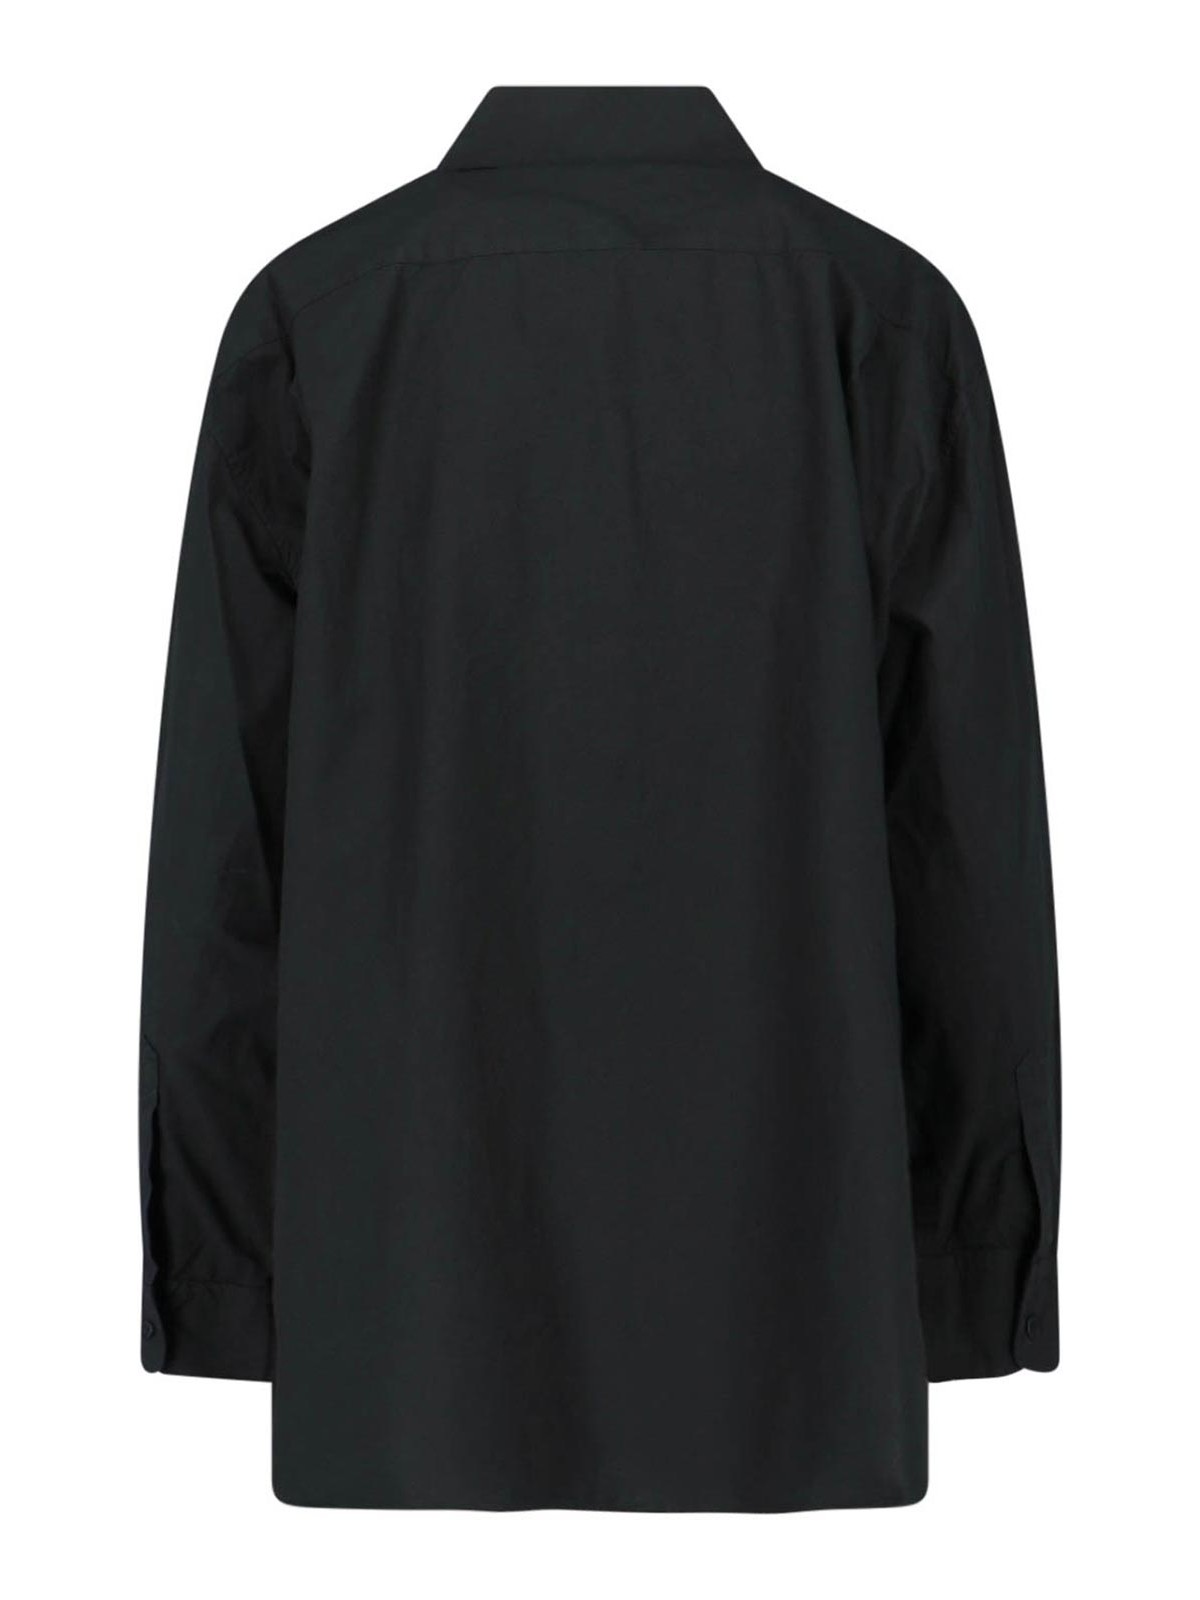 Shop Nili Lotan Shirt In Black